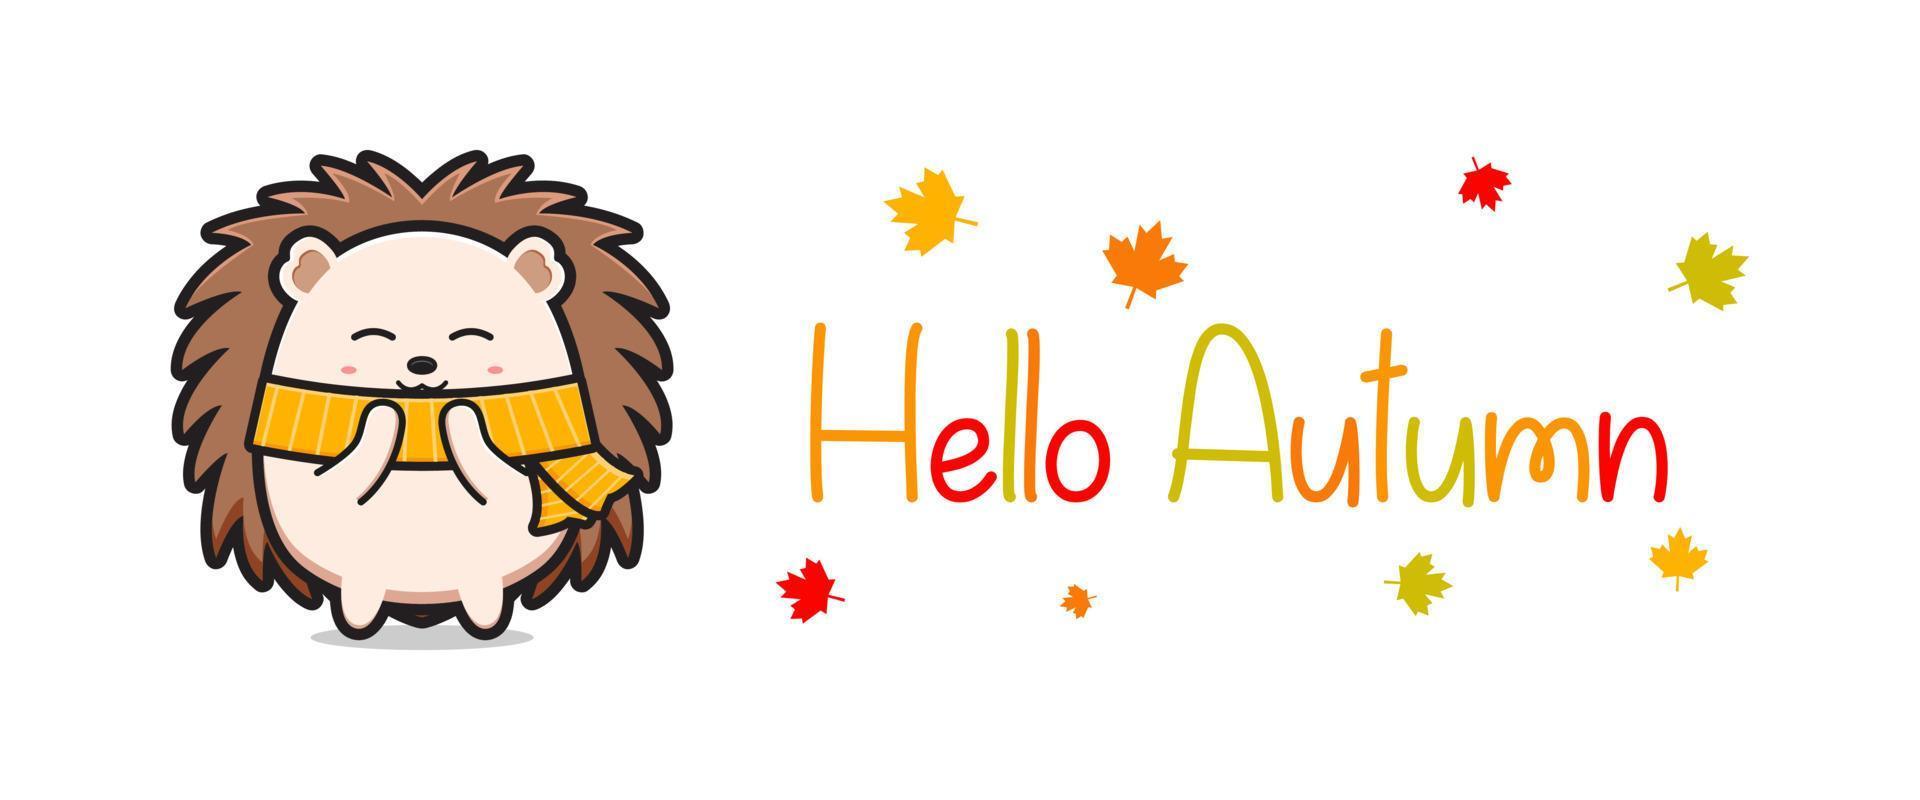 Hello autumn banner with cute hedgehog doodle cartoon icon illustra vector